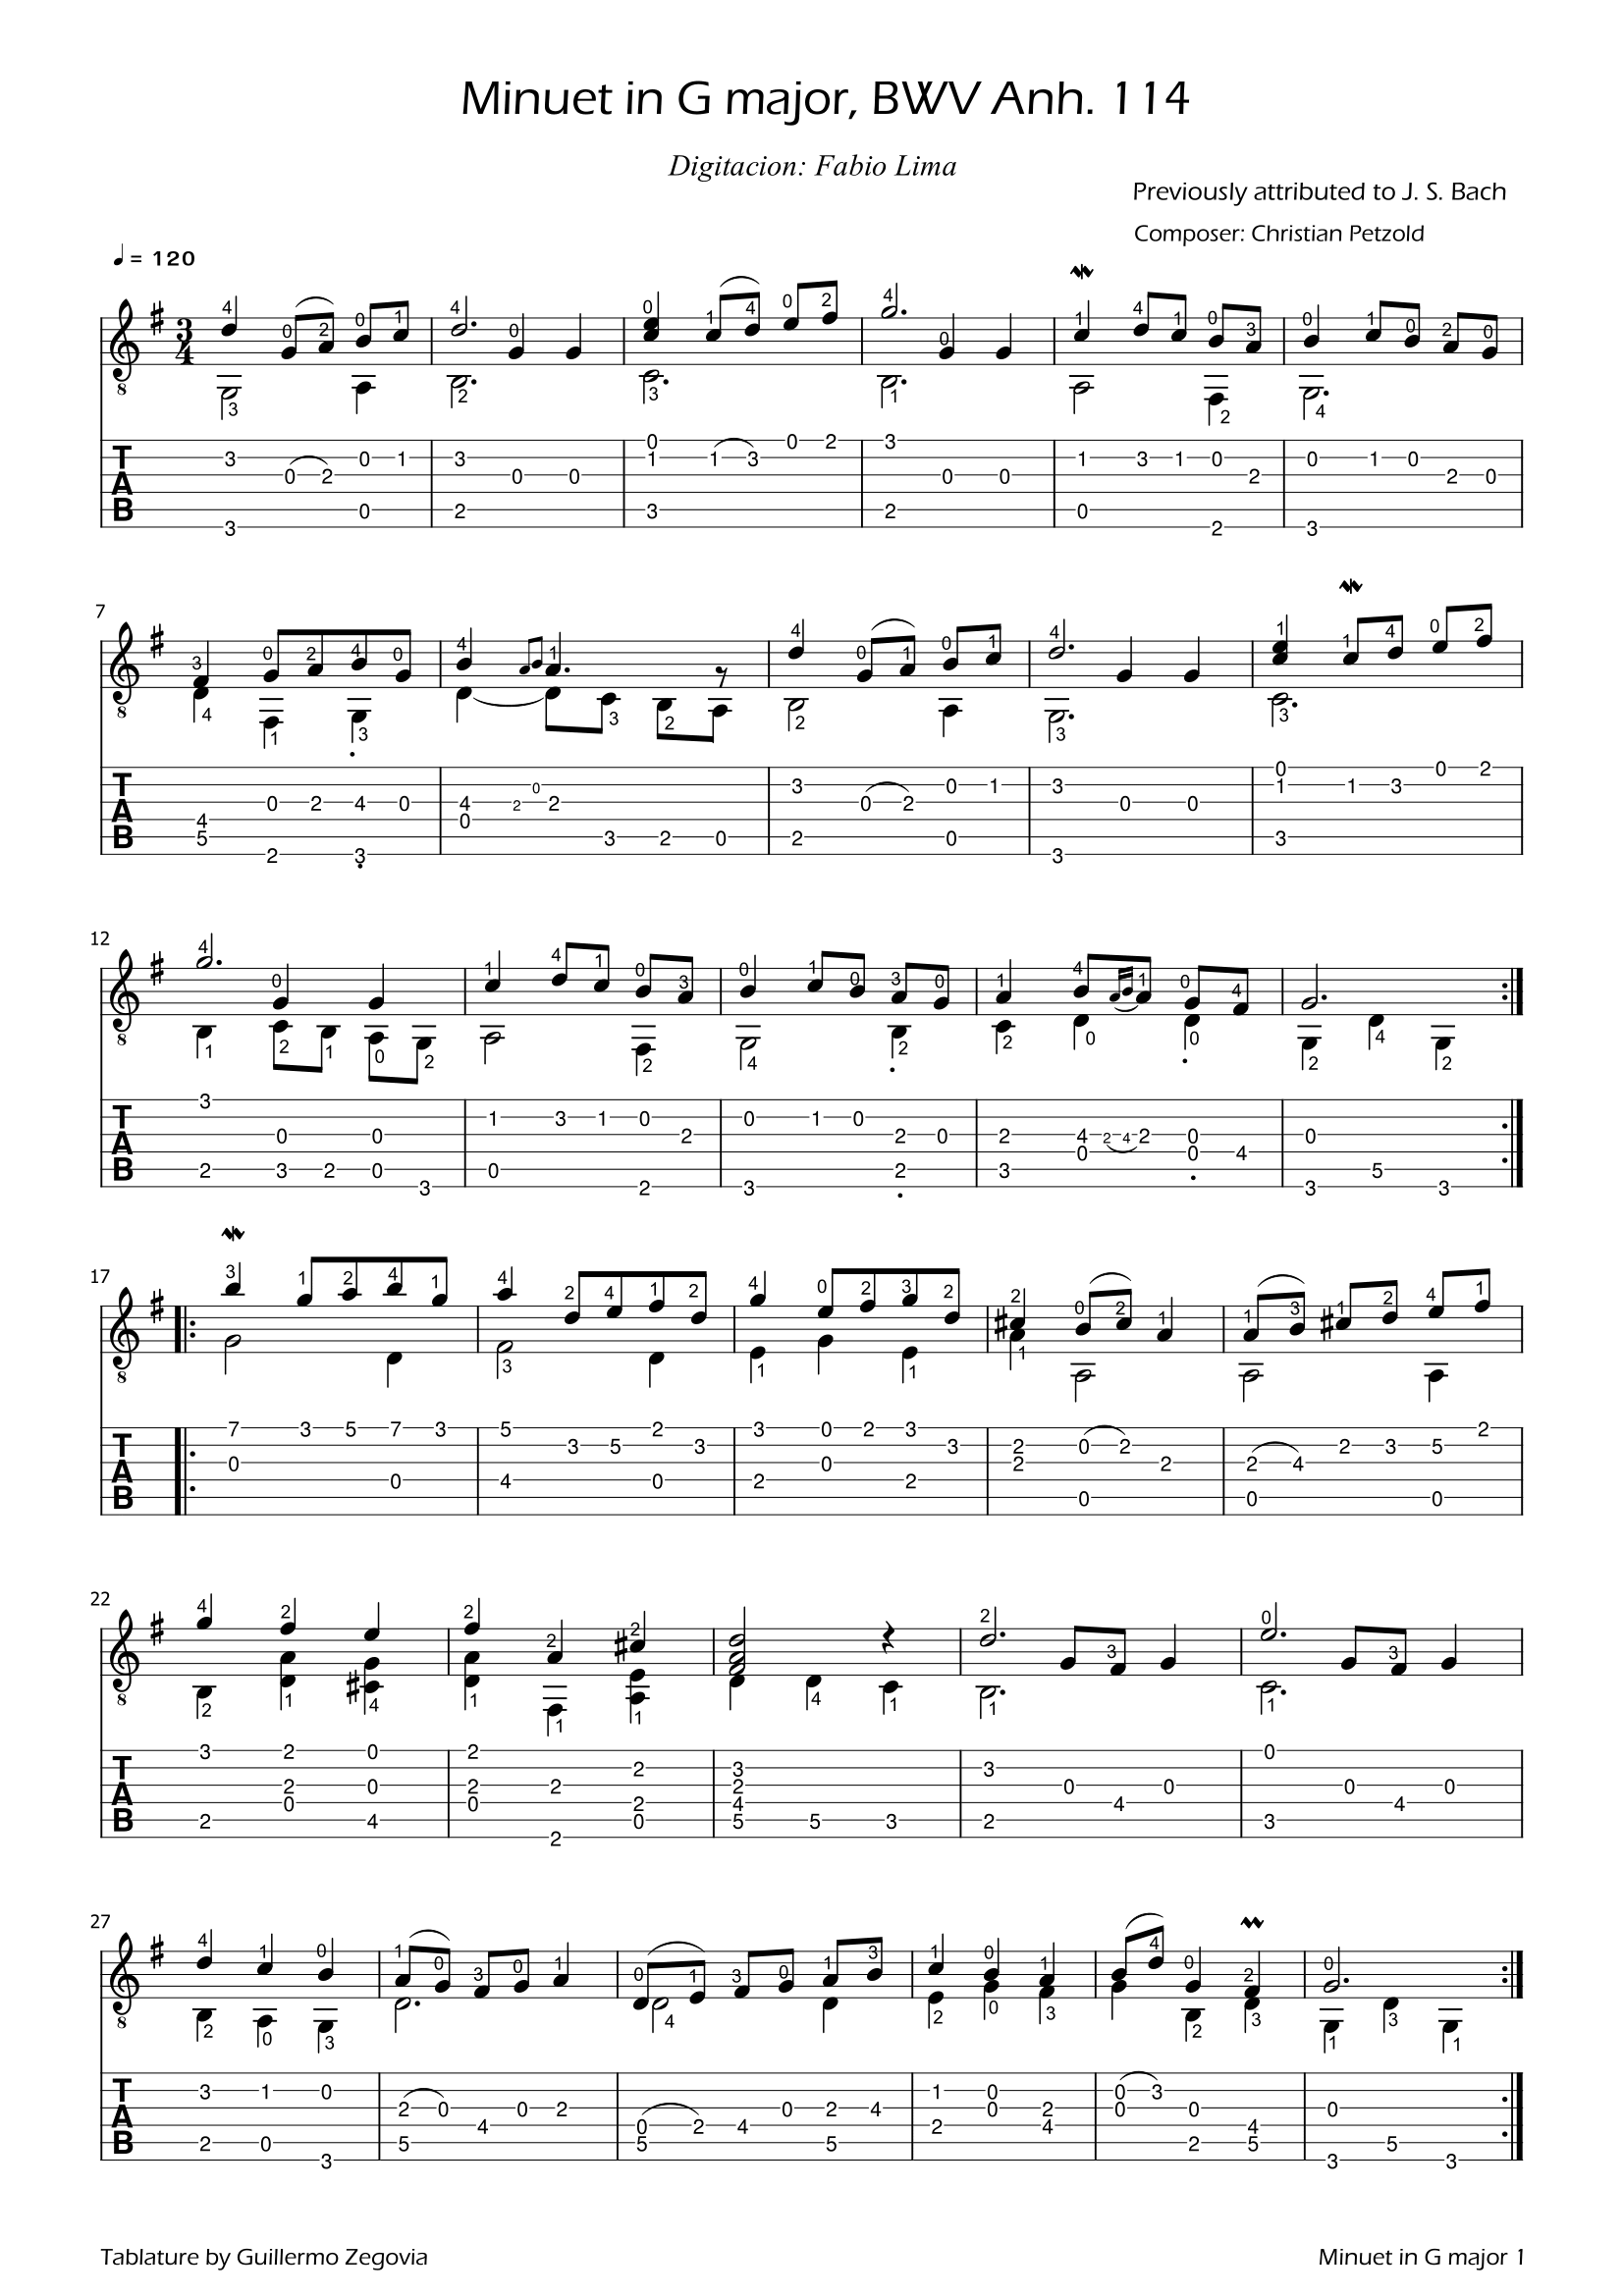 J.S. Bach - Minuet in G major BWV Anh 114 (Classic Guitar)吉他谱(图片谱,指弹,古典吉他)_Johann Sebastian Bach(巴赫)_Minuet in G major, BWV Anh.114-1.png